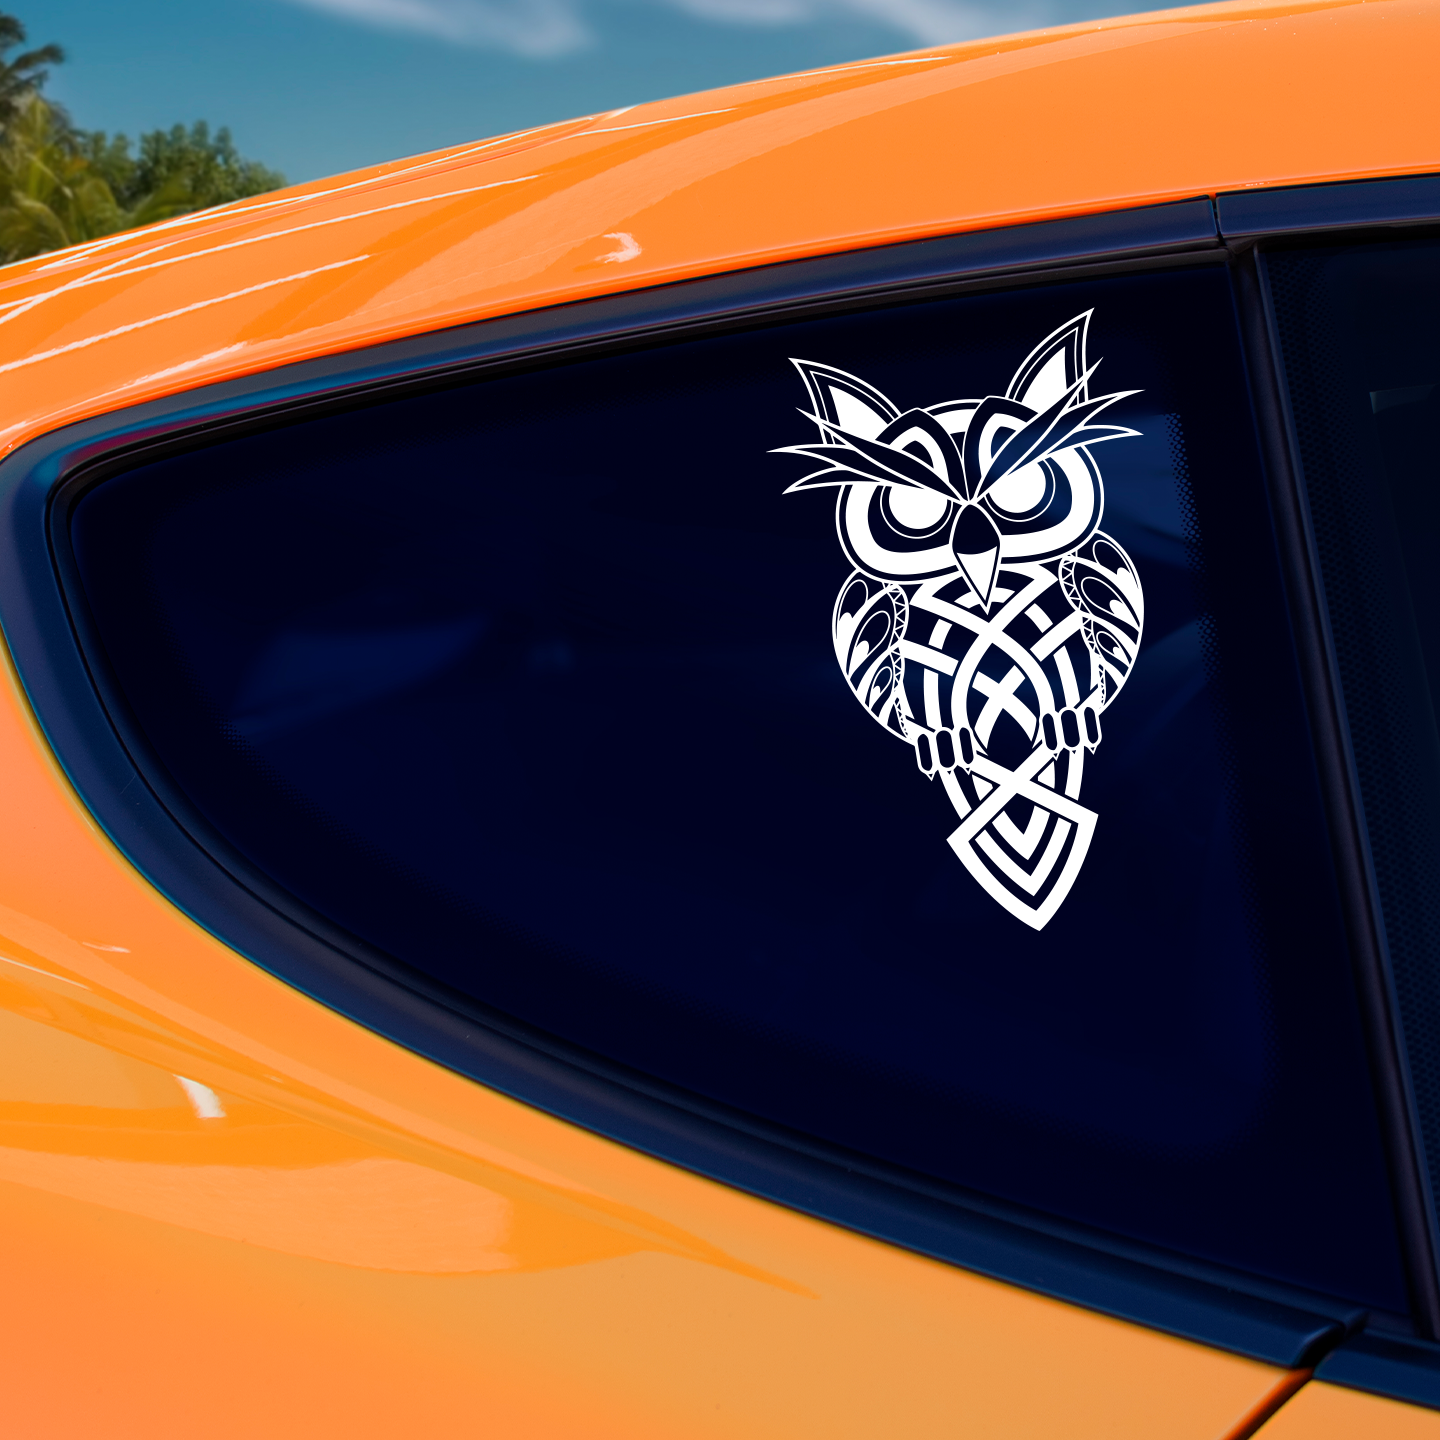 Celtic Owl Sticker